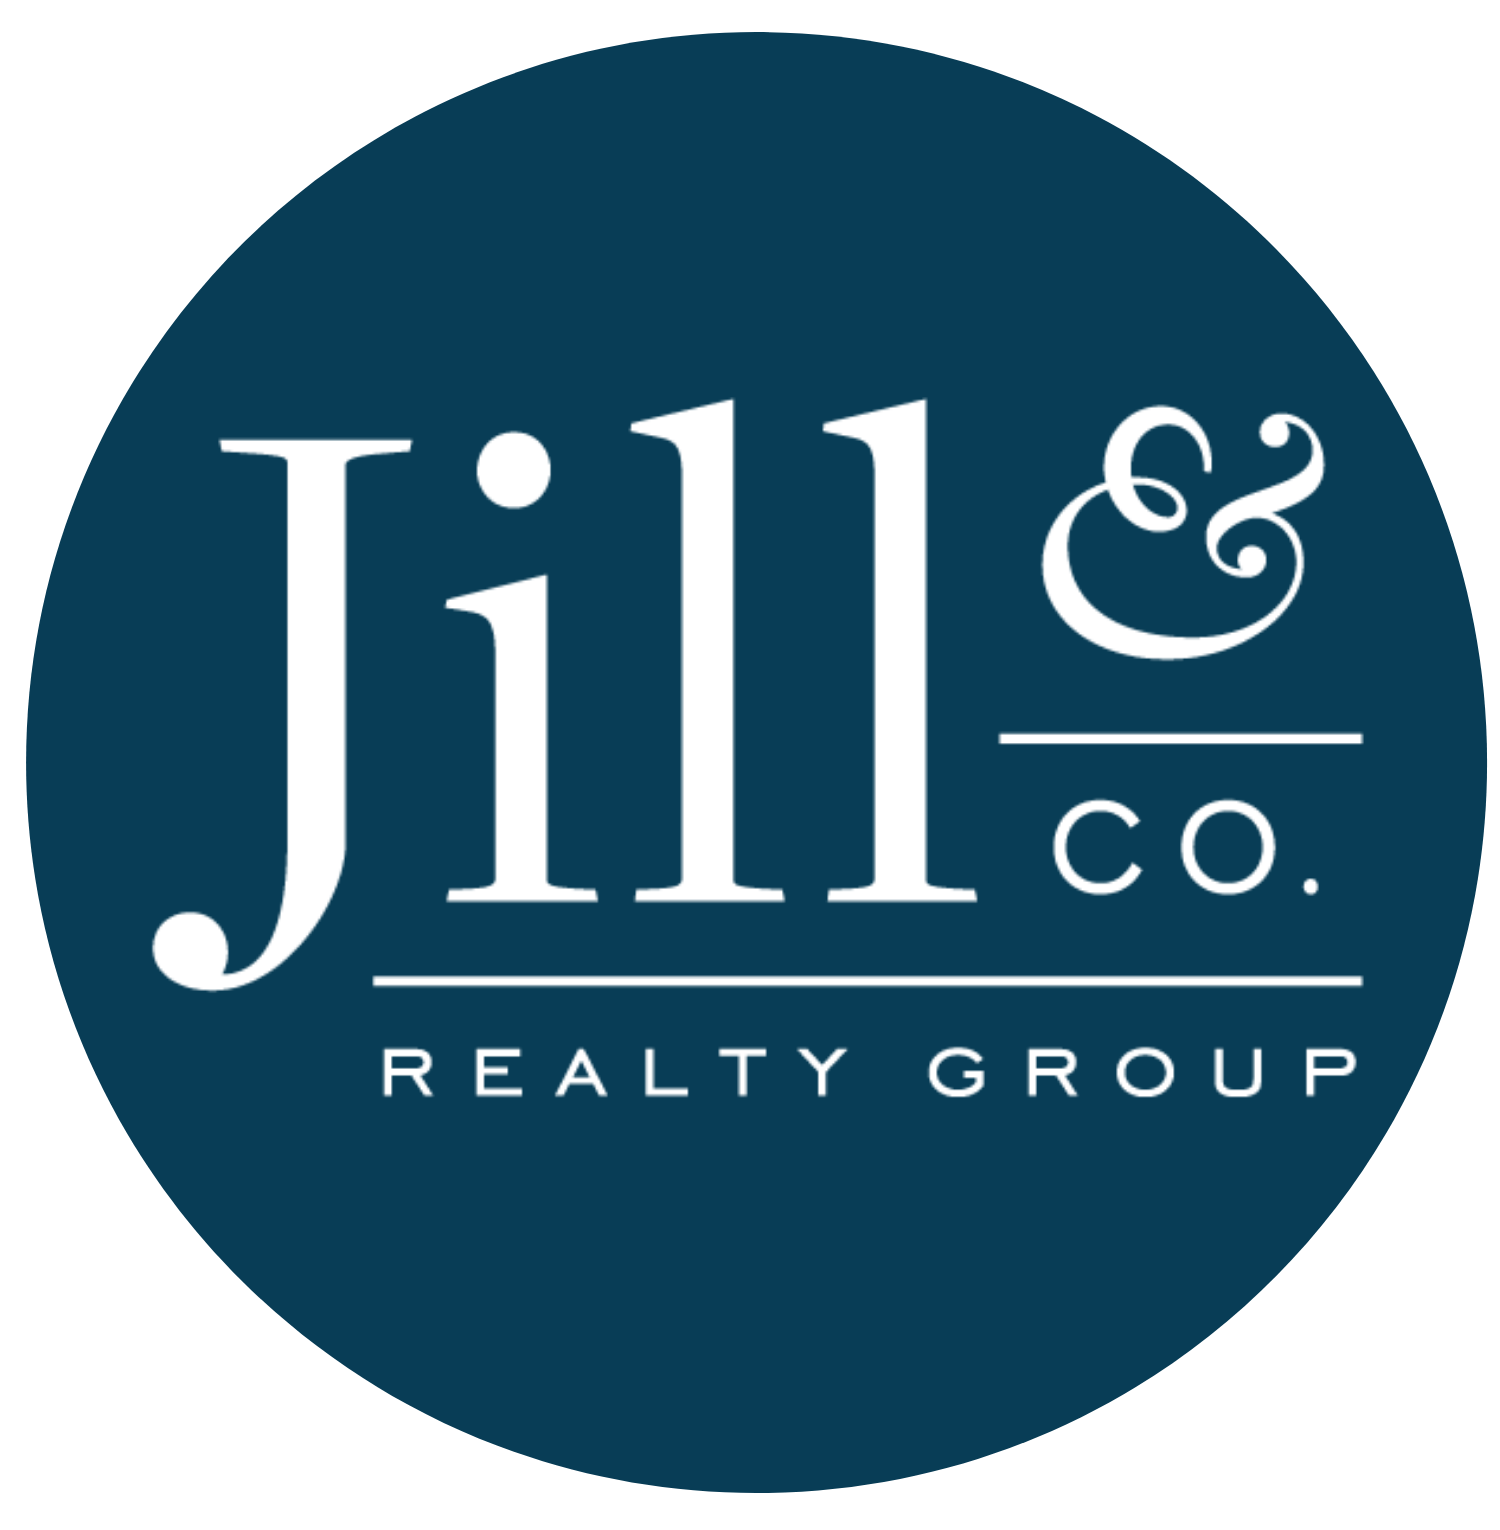 Jill & Co. Realty Group